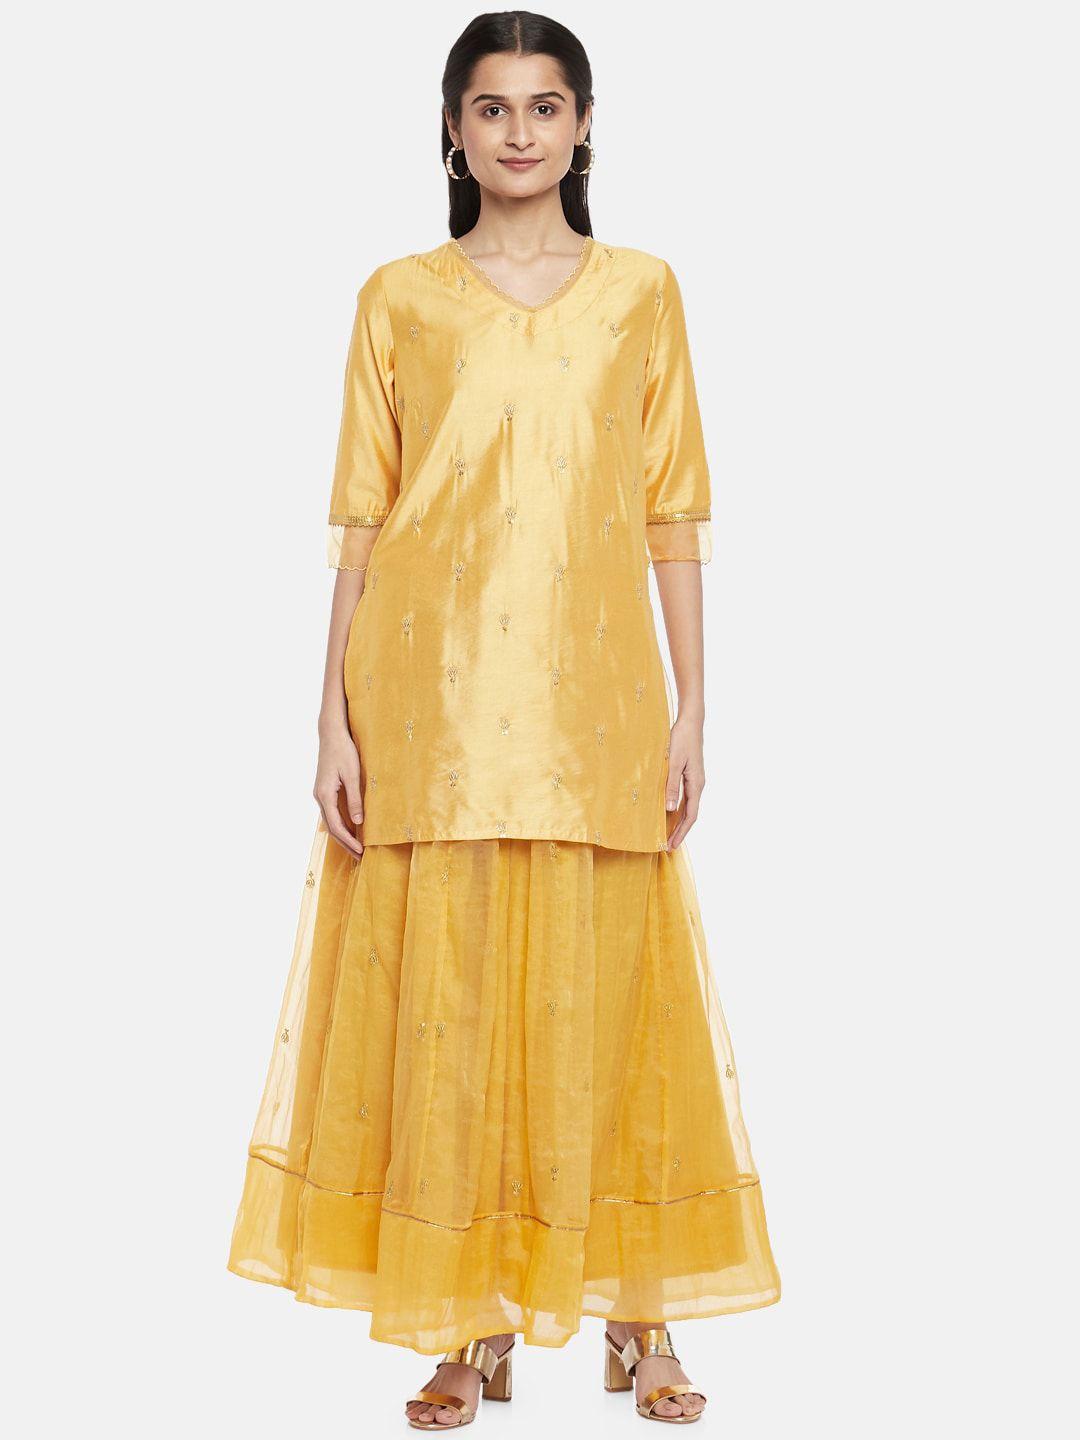 rangmanch by pantaloons women yellow embroidered regular kurta with skirt & dupatta set